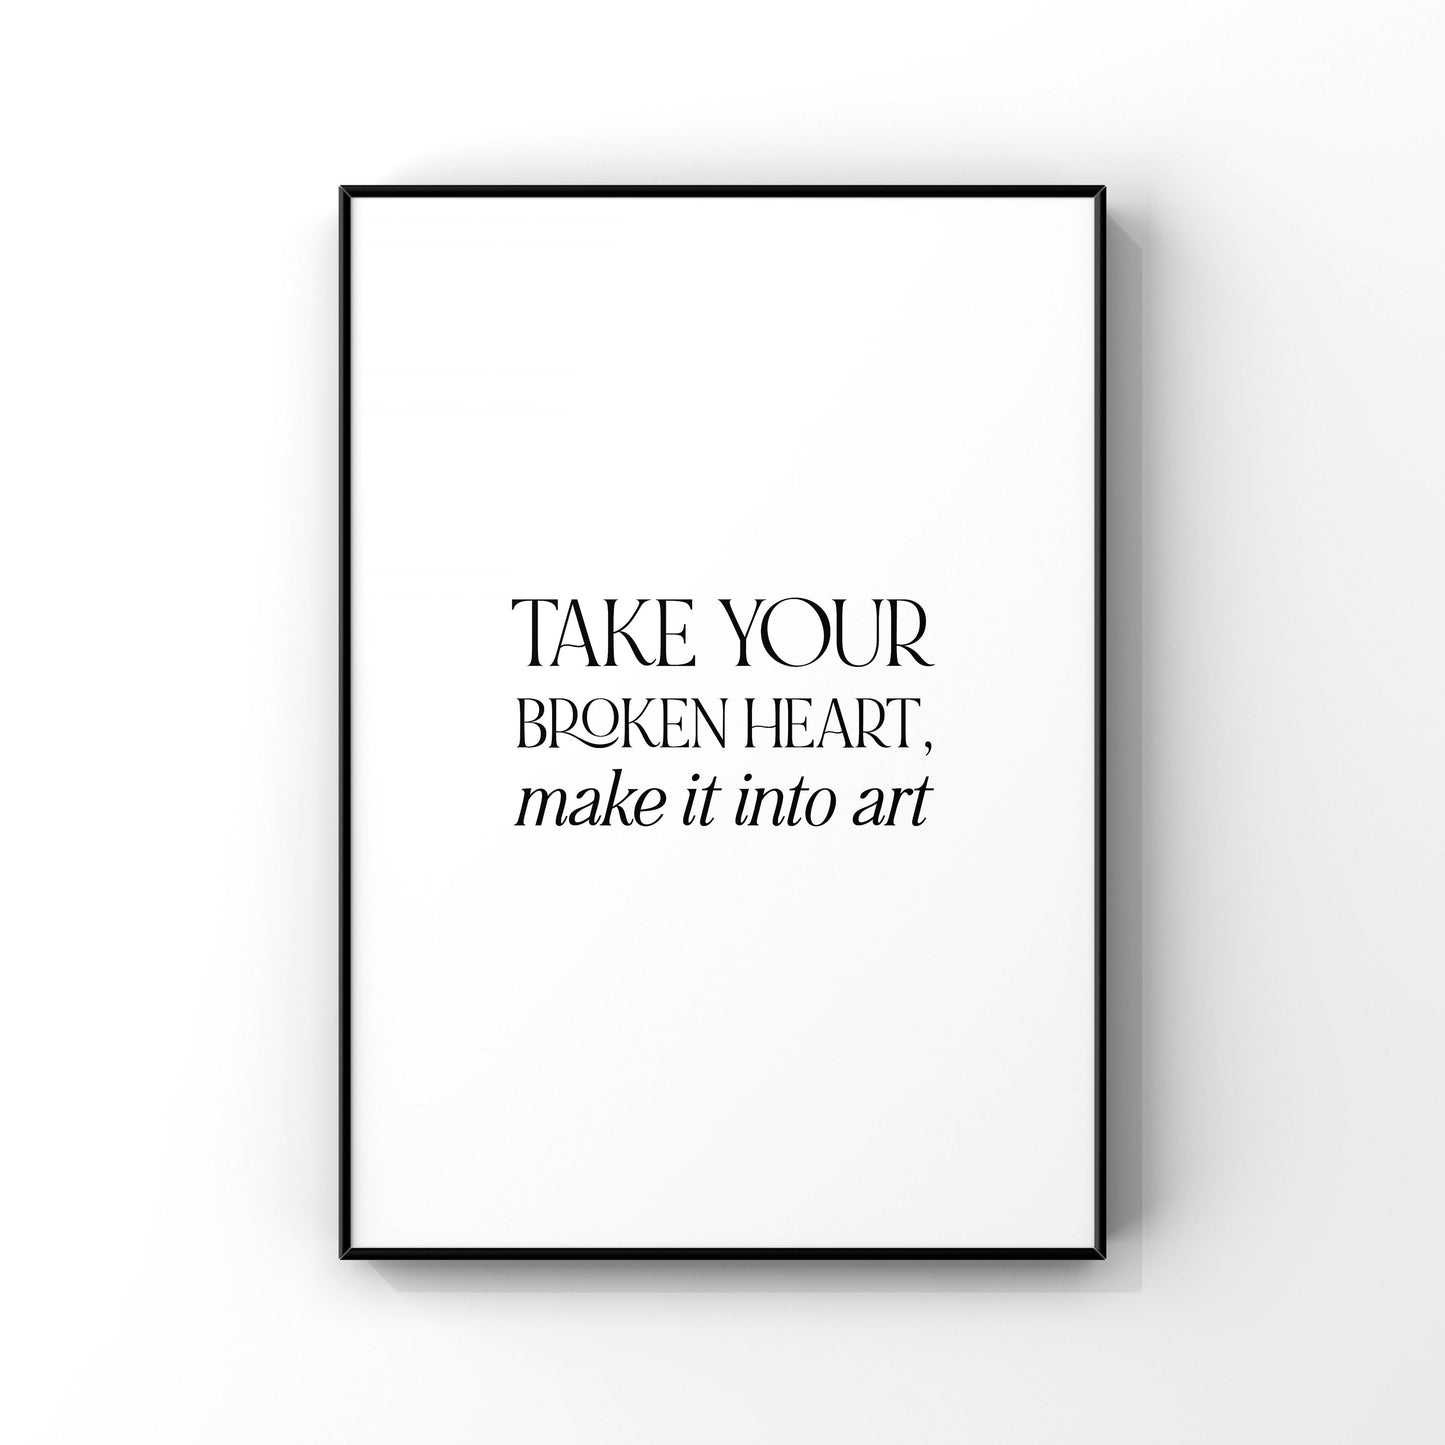 Take your broken heart make into art